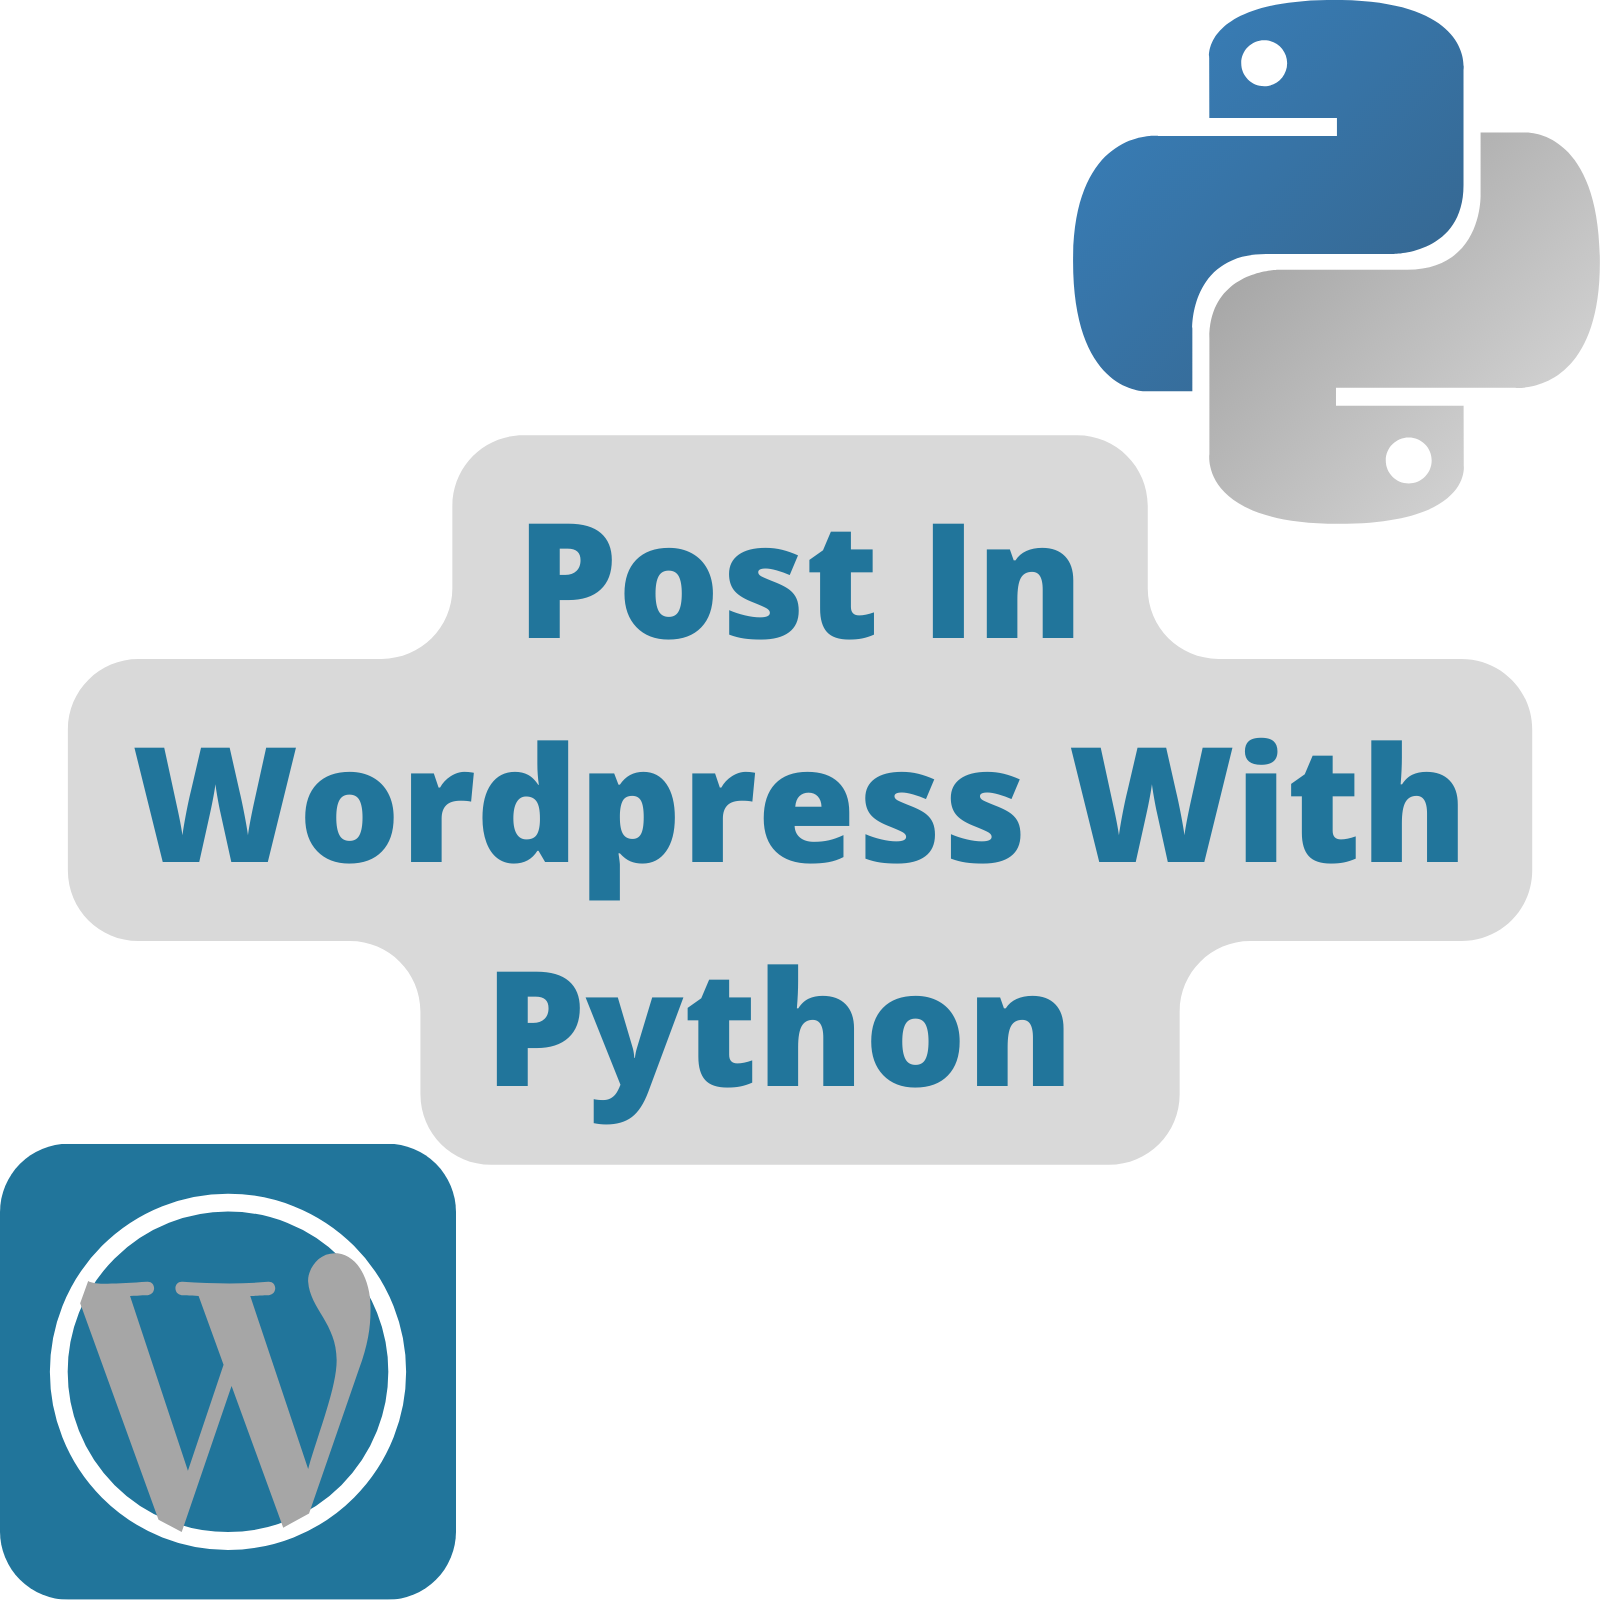 Python WordPress Guide